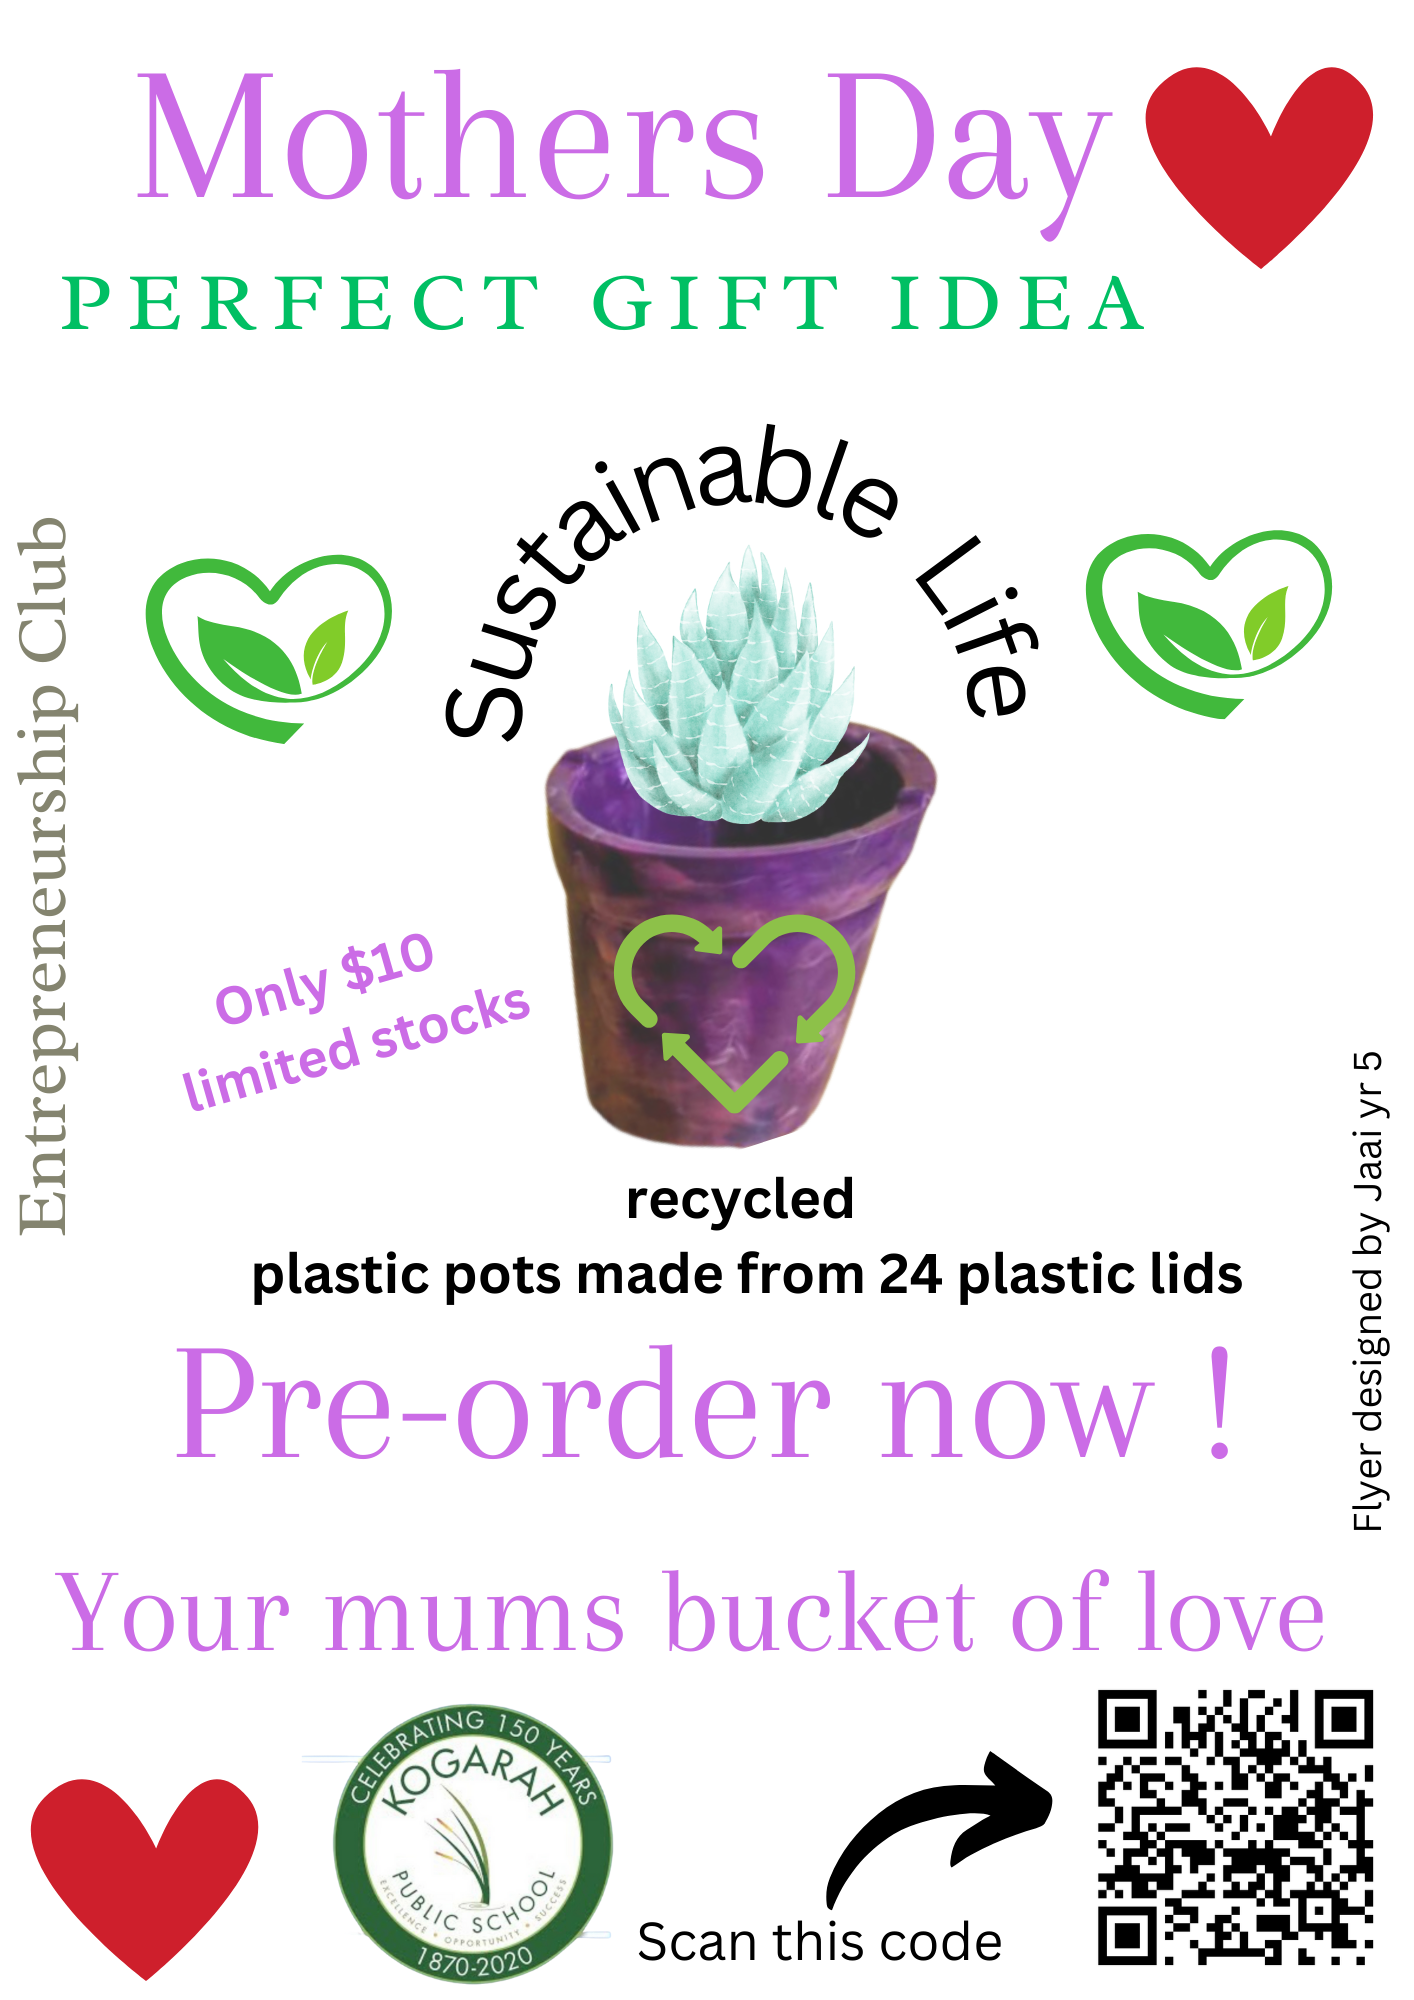 Kogarah Recycled Plastic Pots